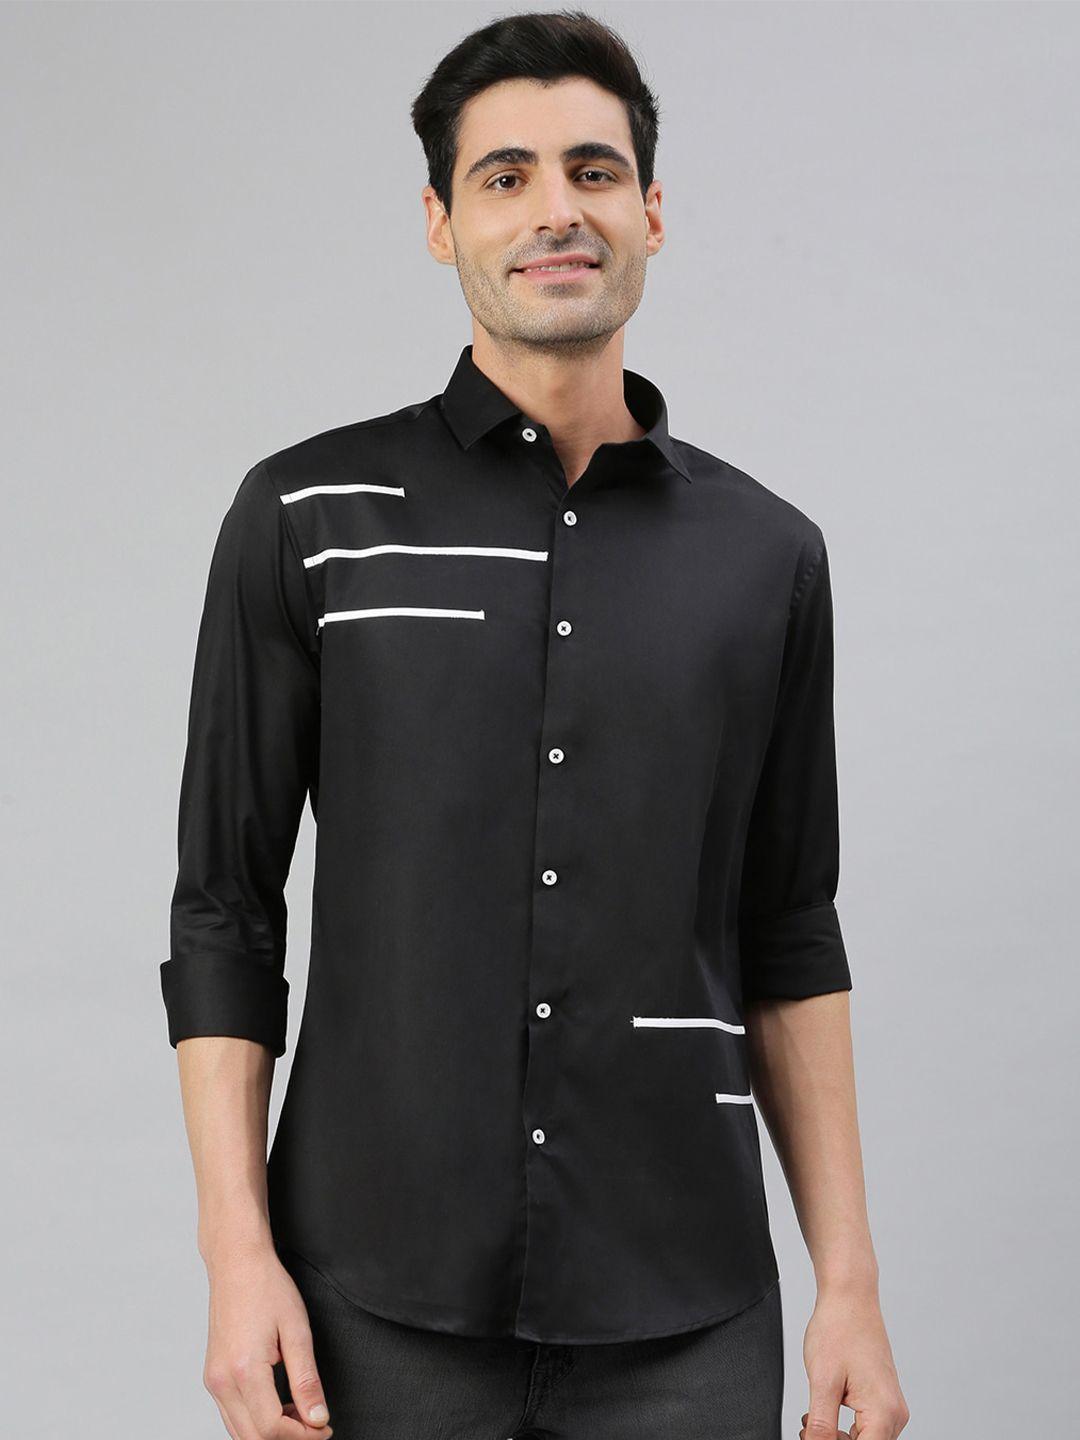 mr button men black & white smart slim fit striped cotton casual shirt